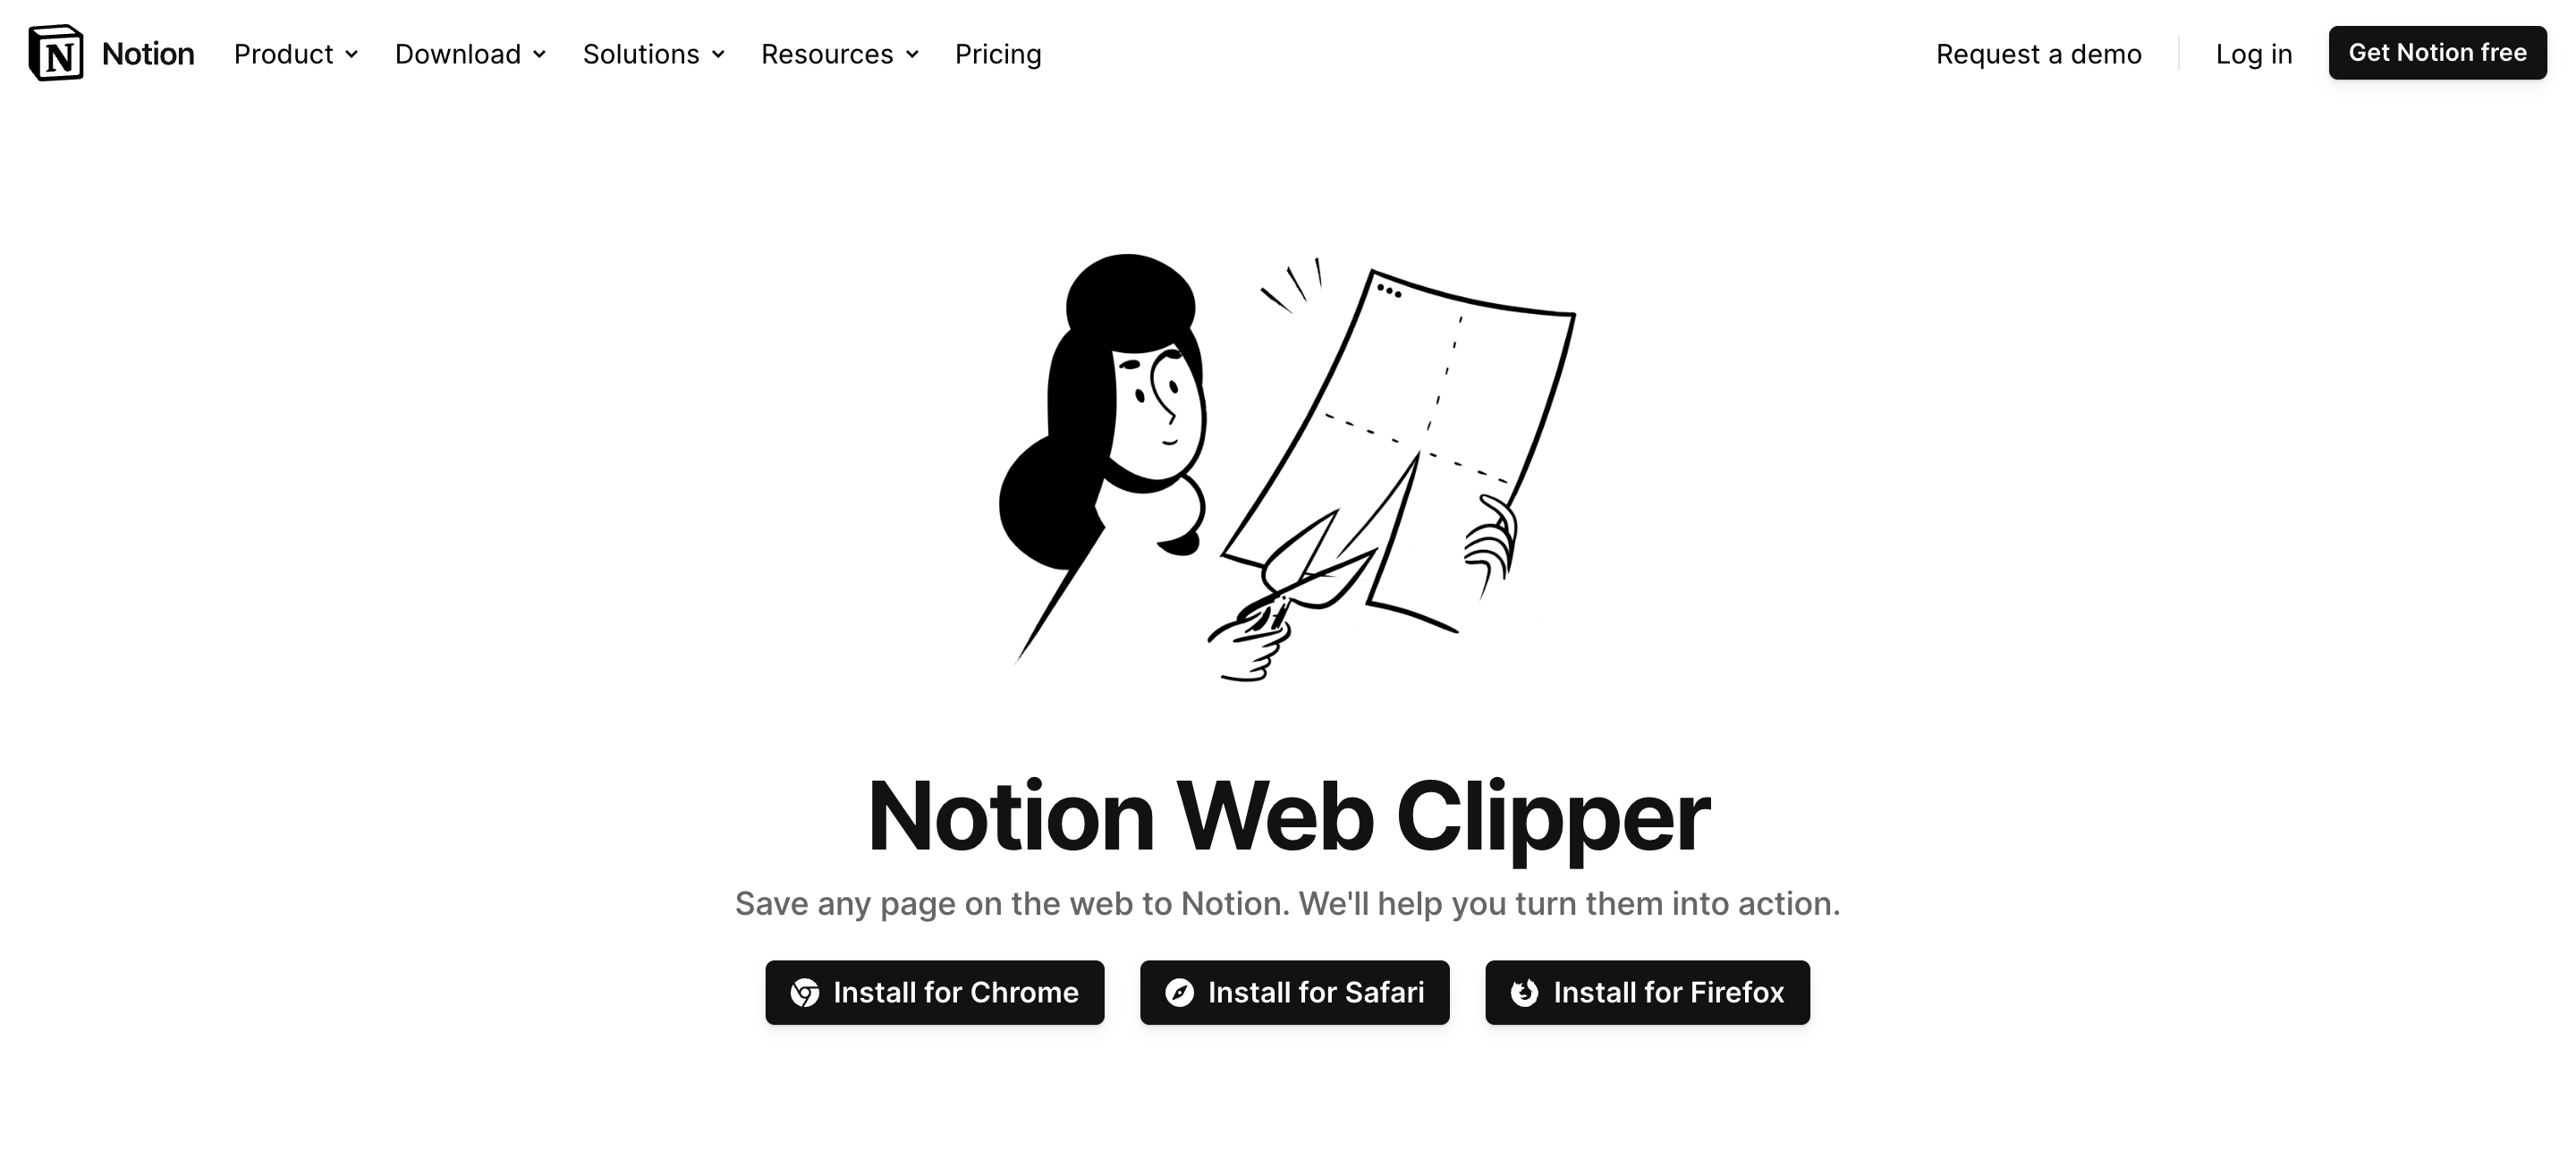 Notion 官網 Notion Web Clipper 頁面